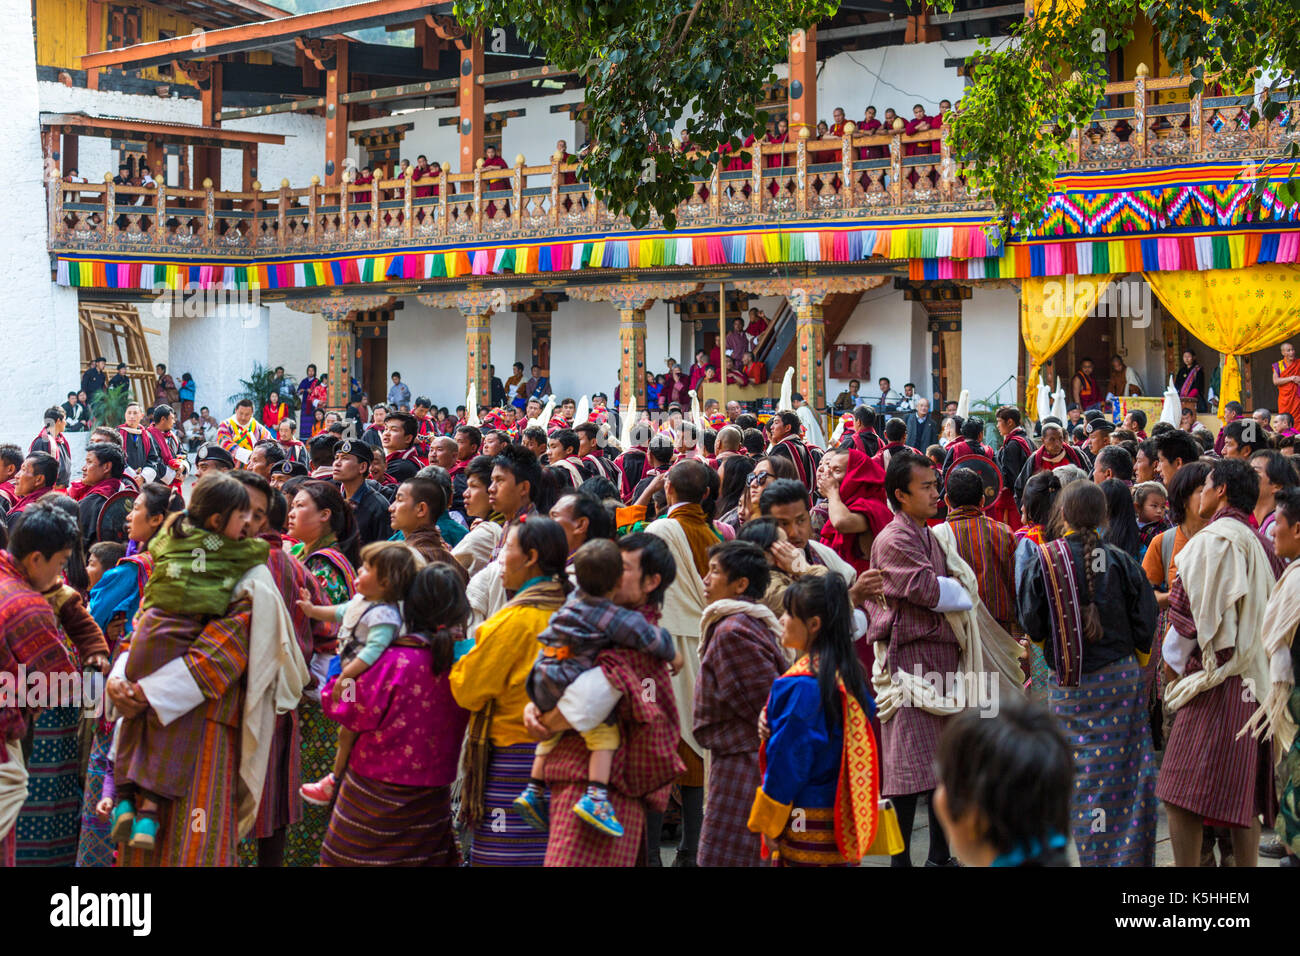 Punakha Drubchen (historical celebration) at Punakha Dzong, Western Bhutan. Stock Photo